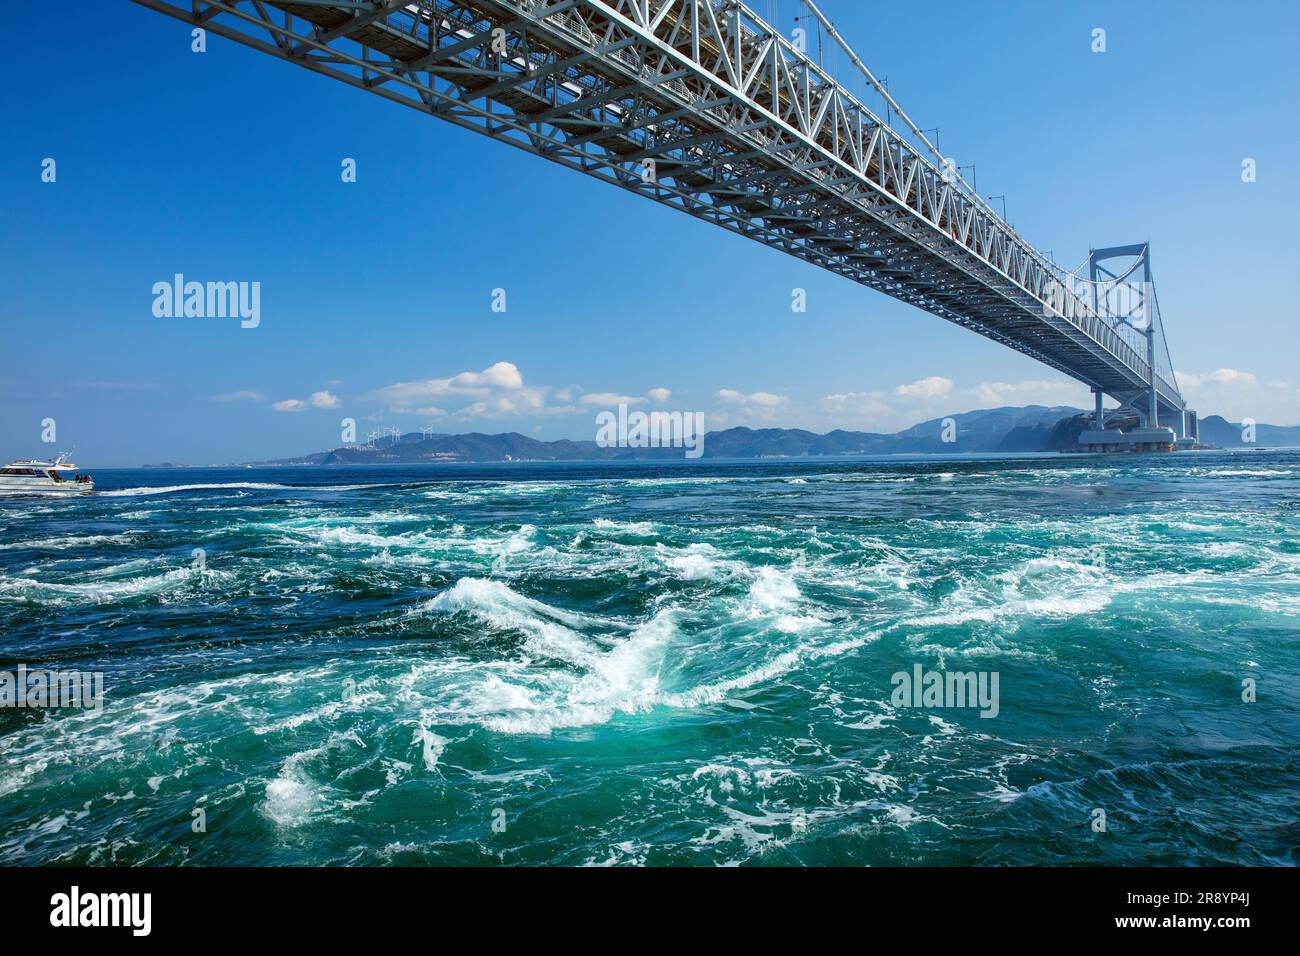 Onaruto bridge and Naruto whirlpools, Naruto Strait Stock Photo